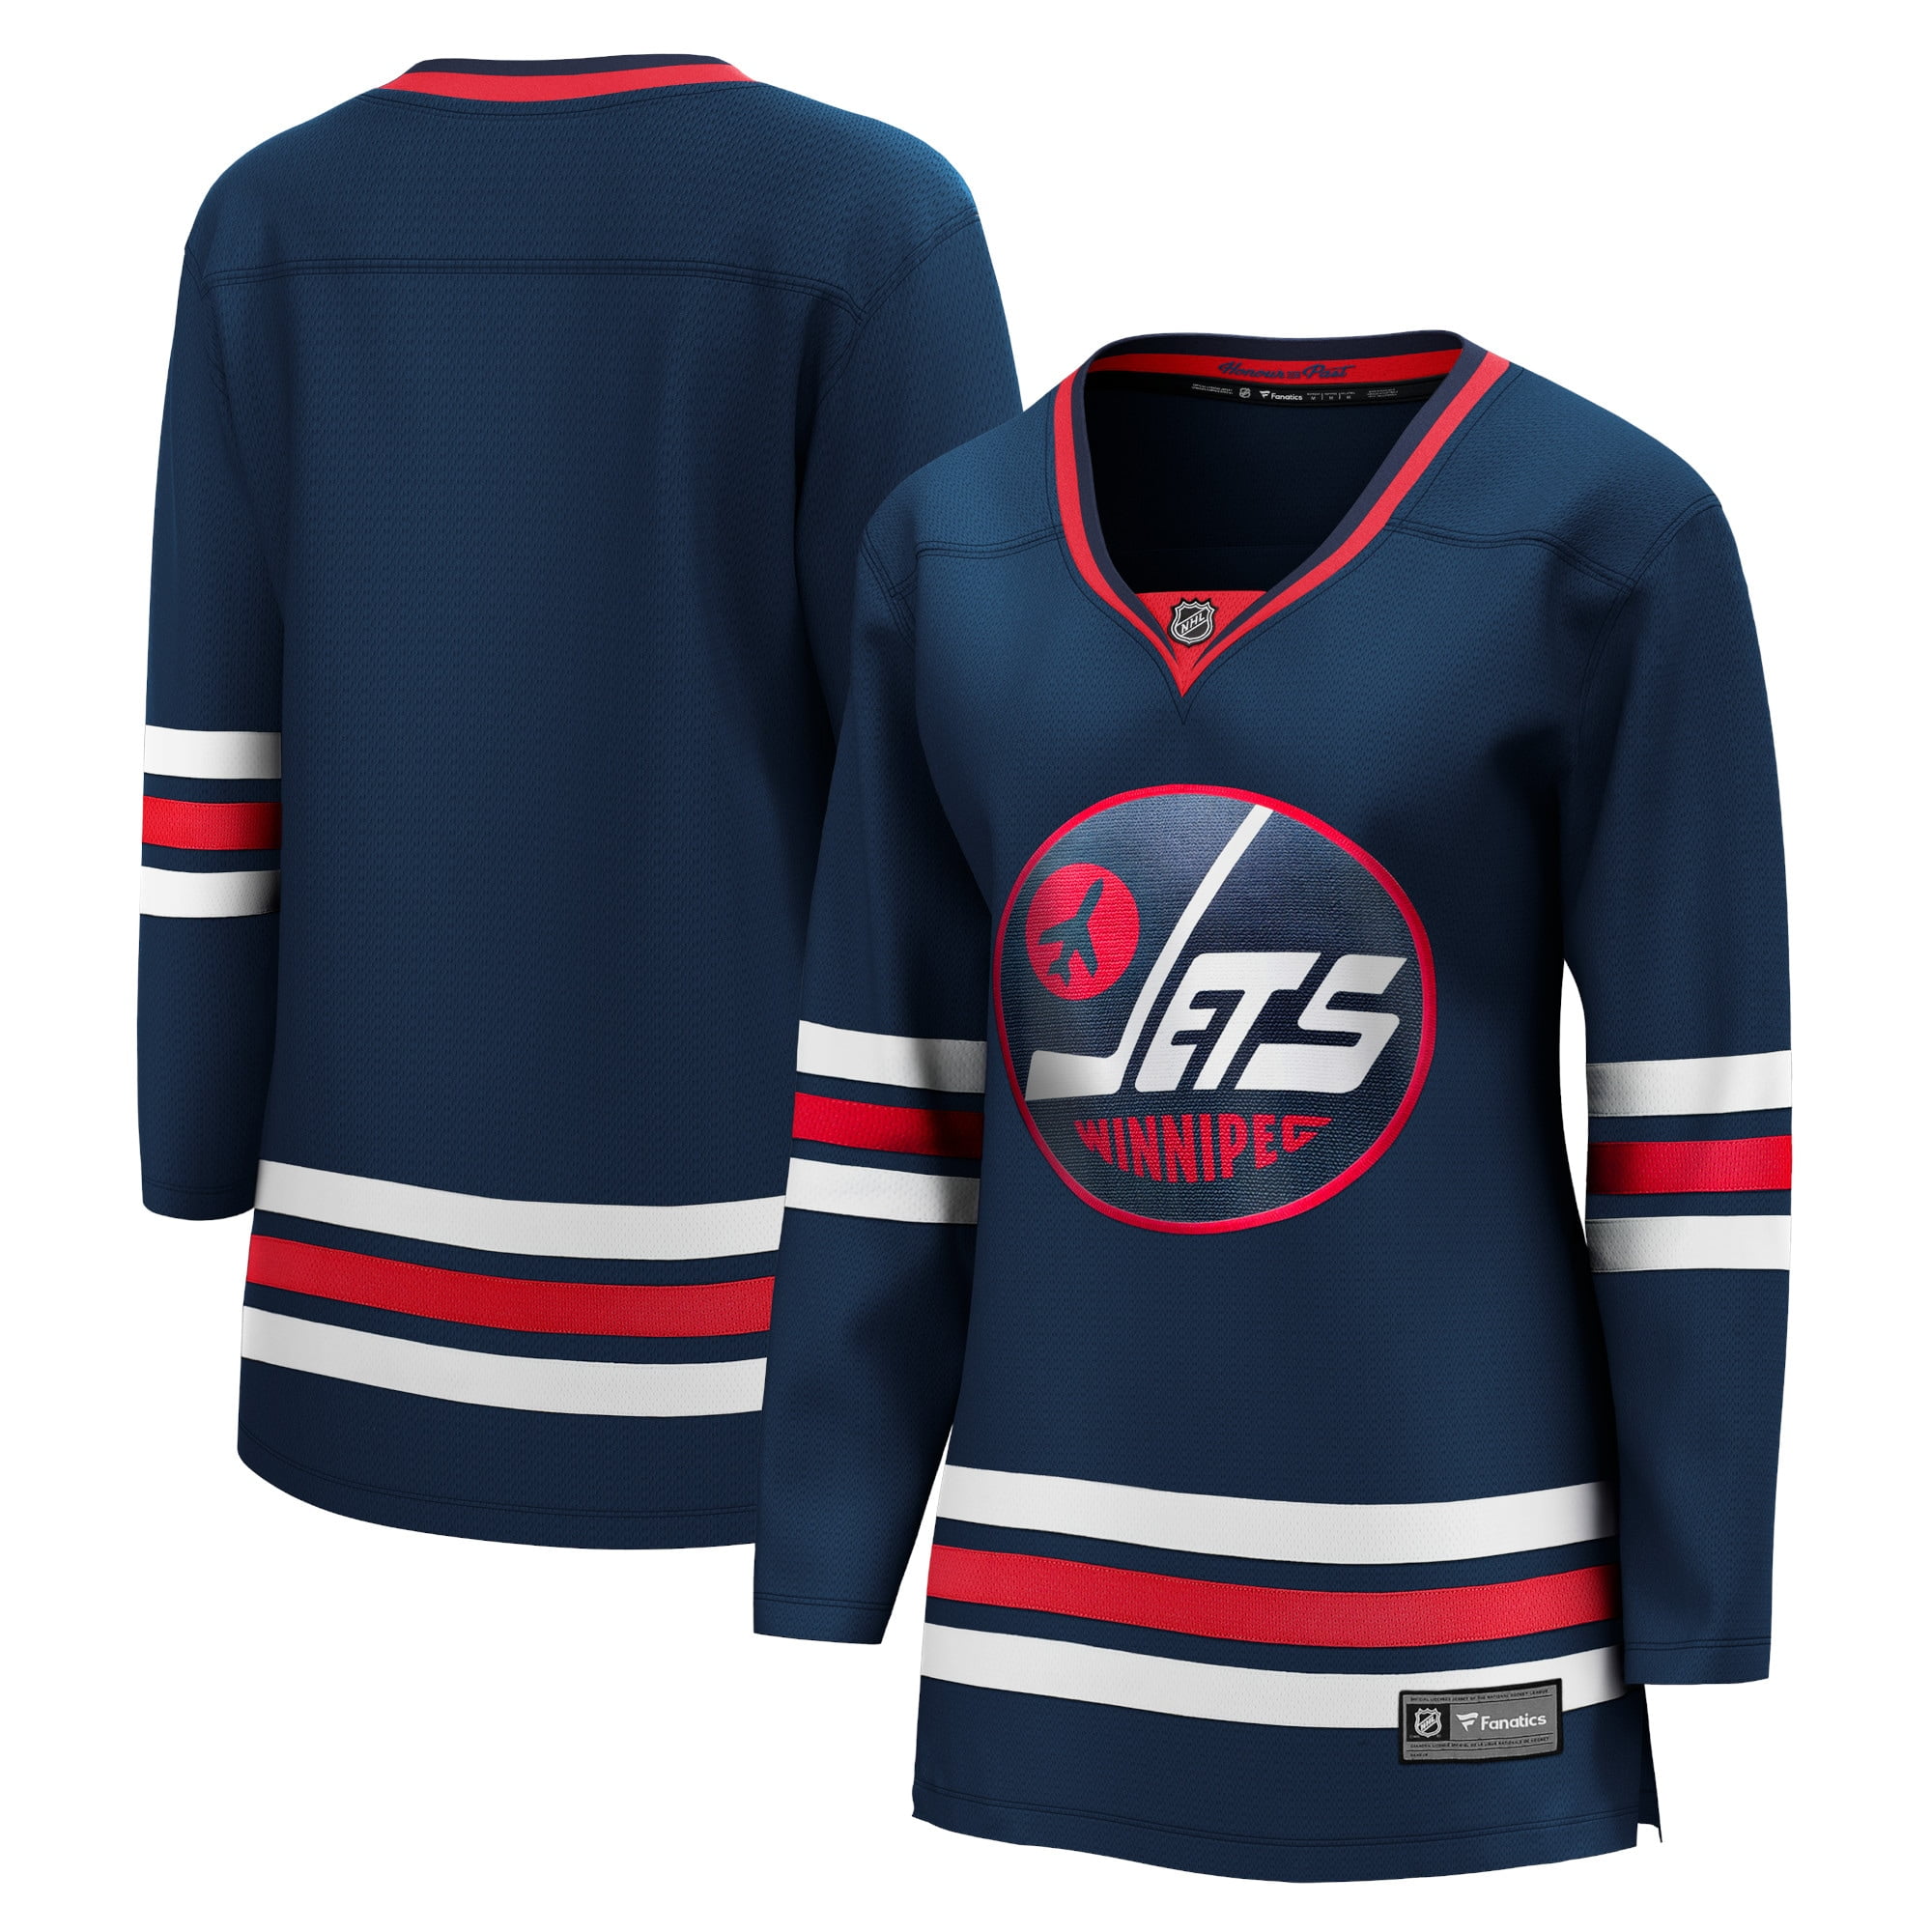 NHL Winnipeg Jets Fanatic Blue Home Jersey 2XL